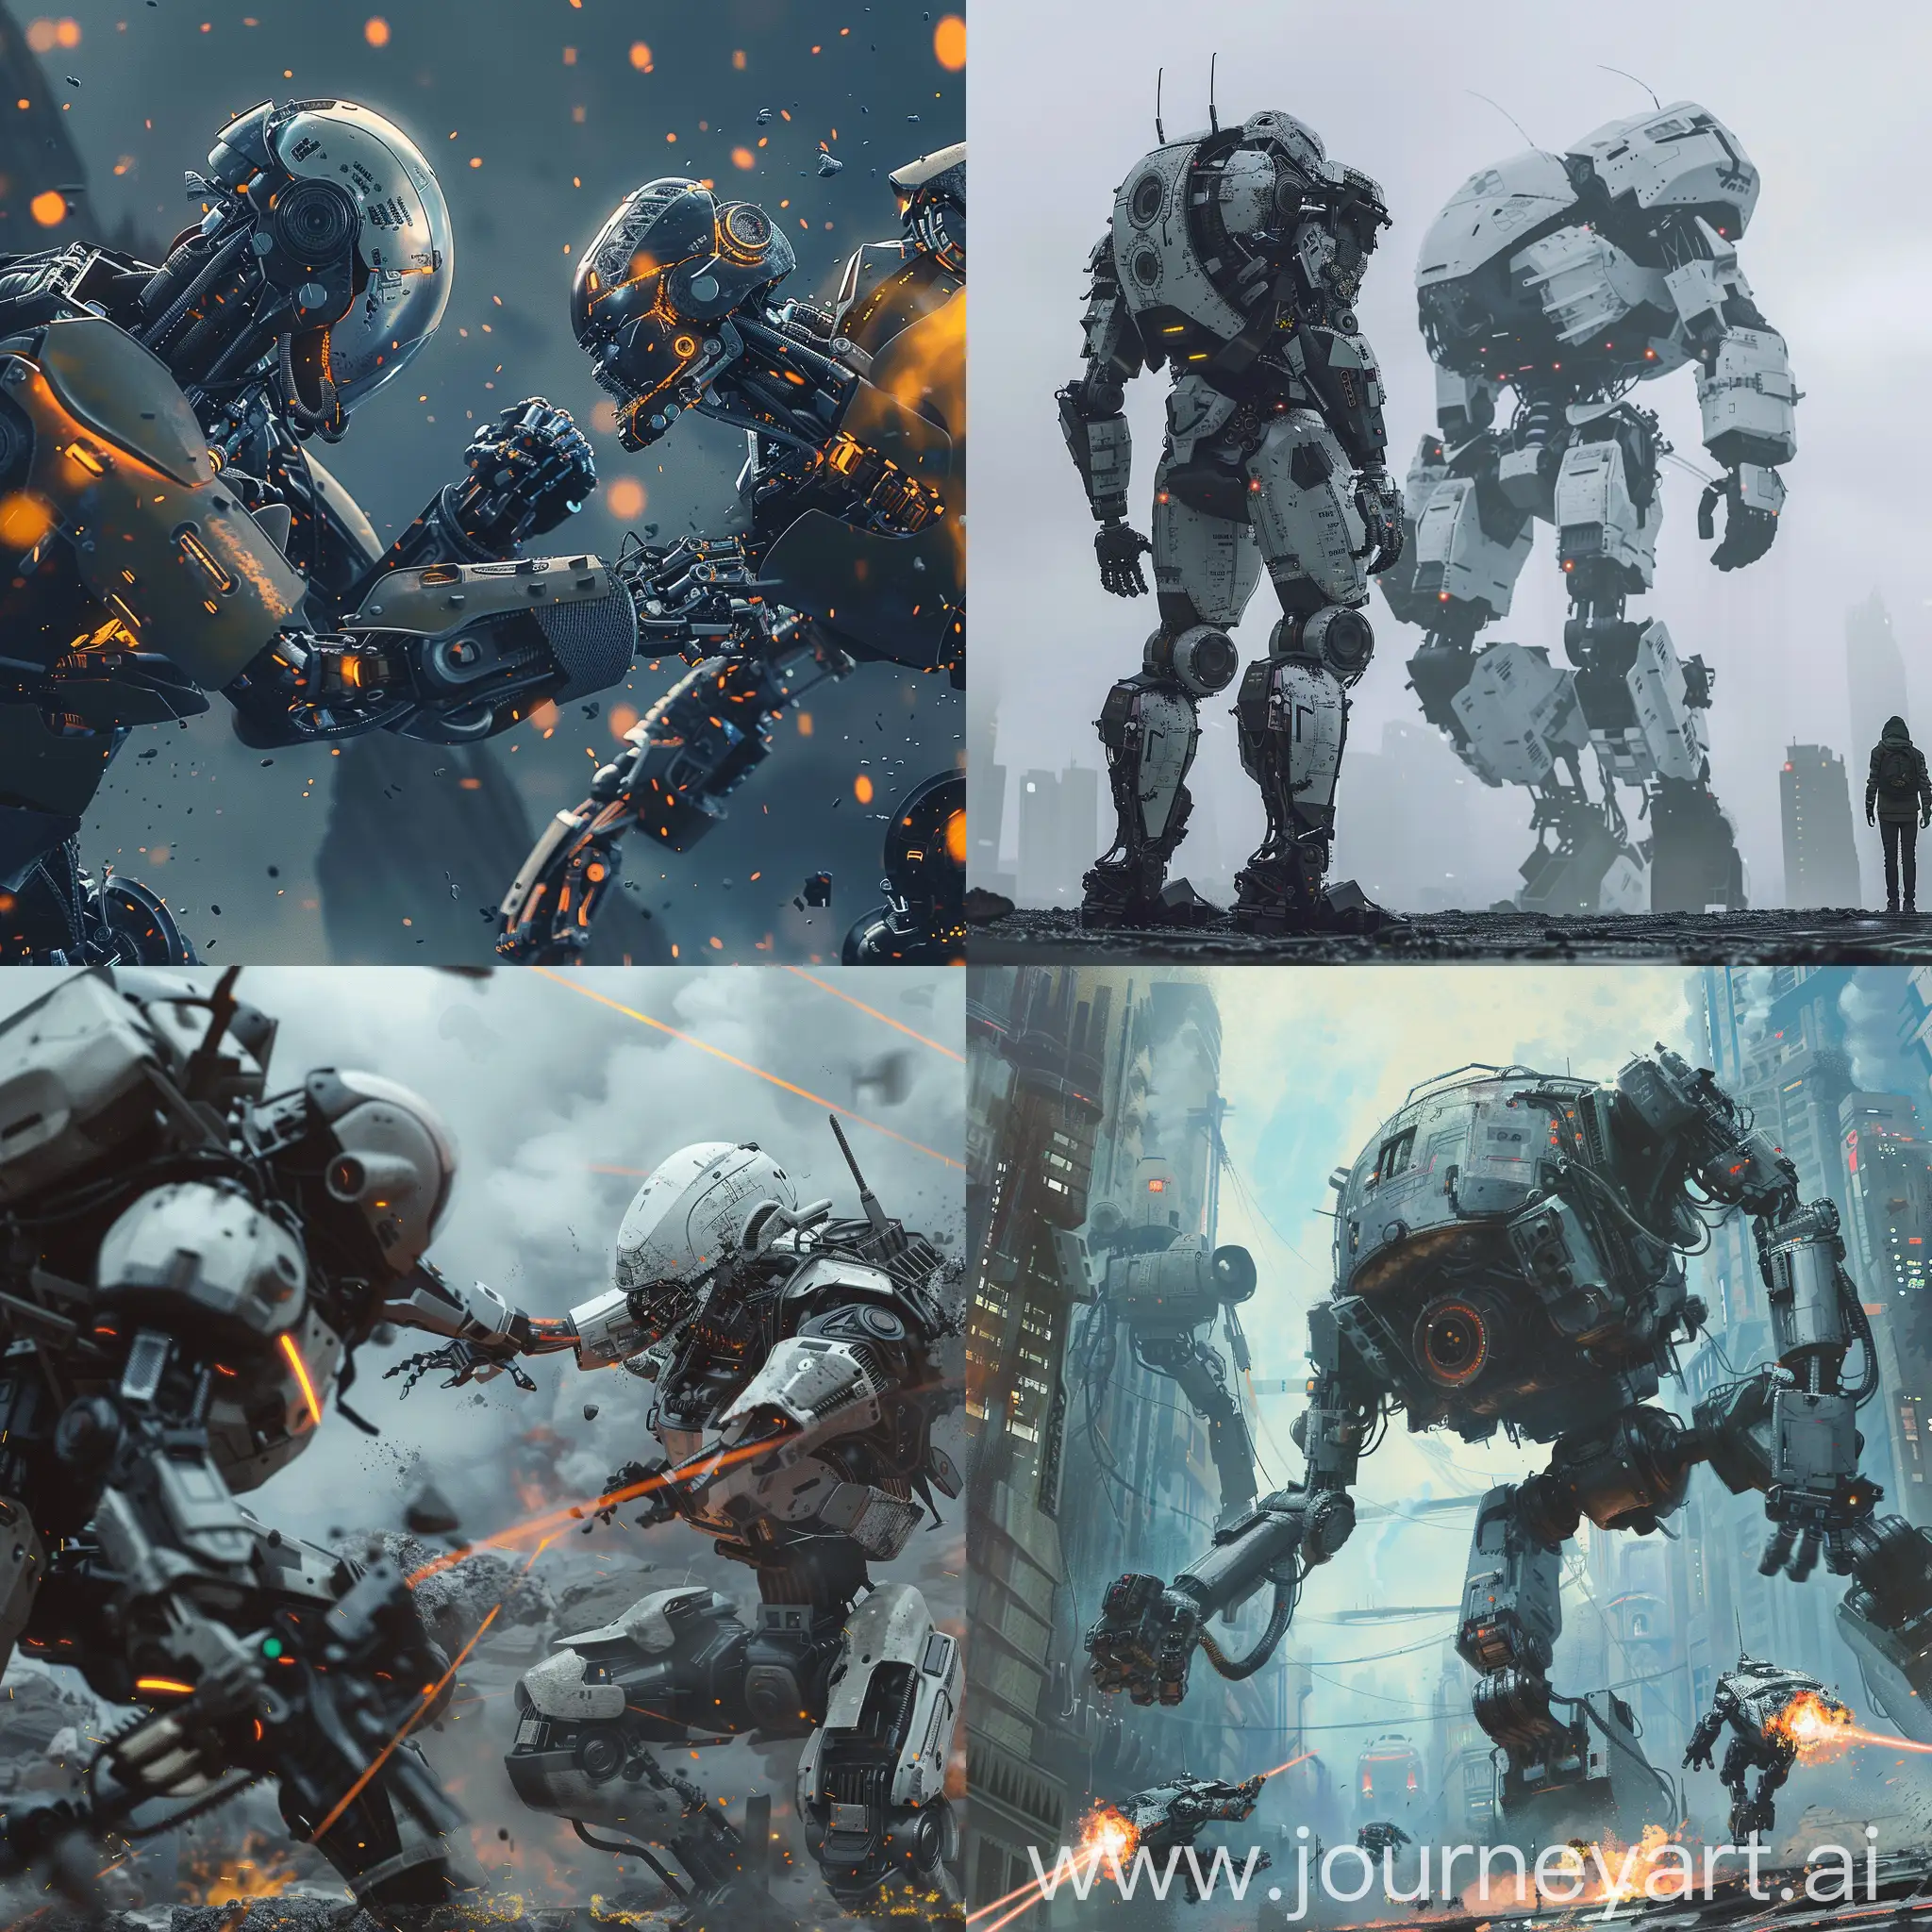 Epic-SciFi-Battle-Dueling-Robots-Clash-in-HighContrast-Showdown